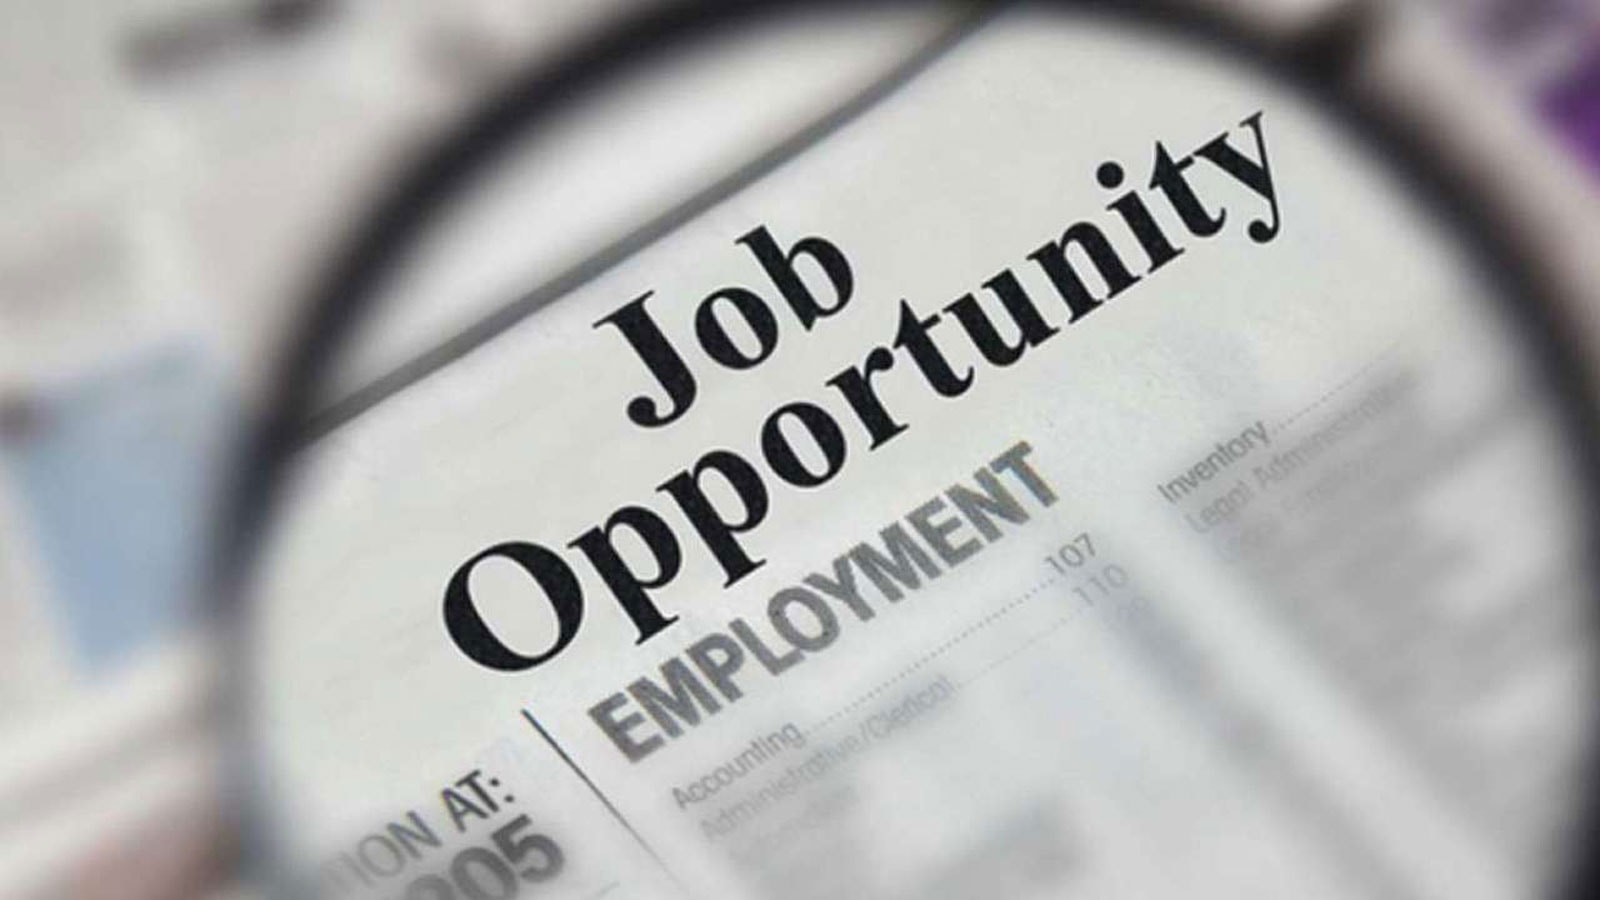 303 Posts | BVG India Limited Jobs for Srinagar & Jammu | Walk-in-interview